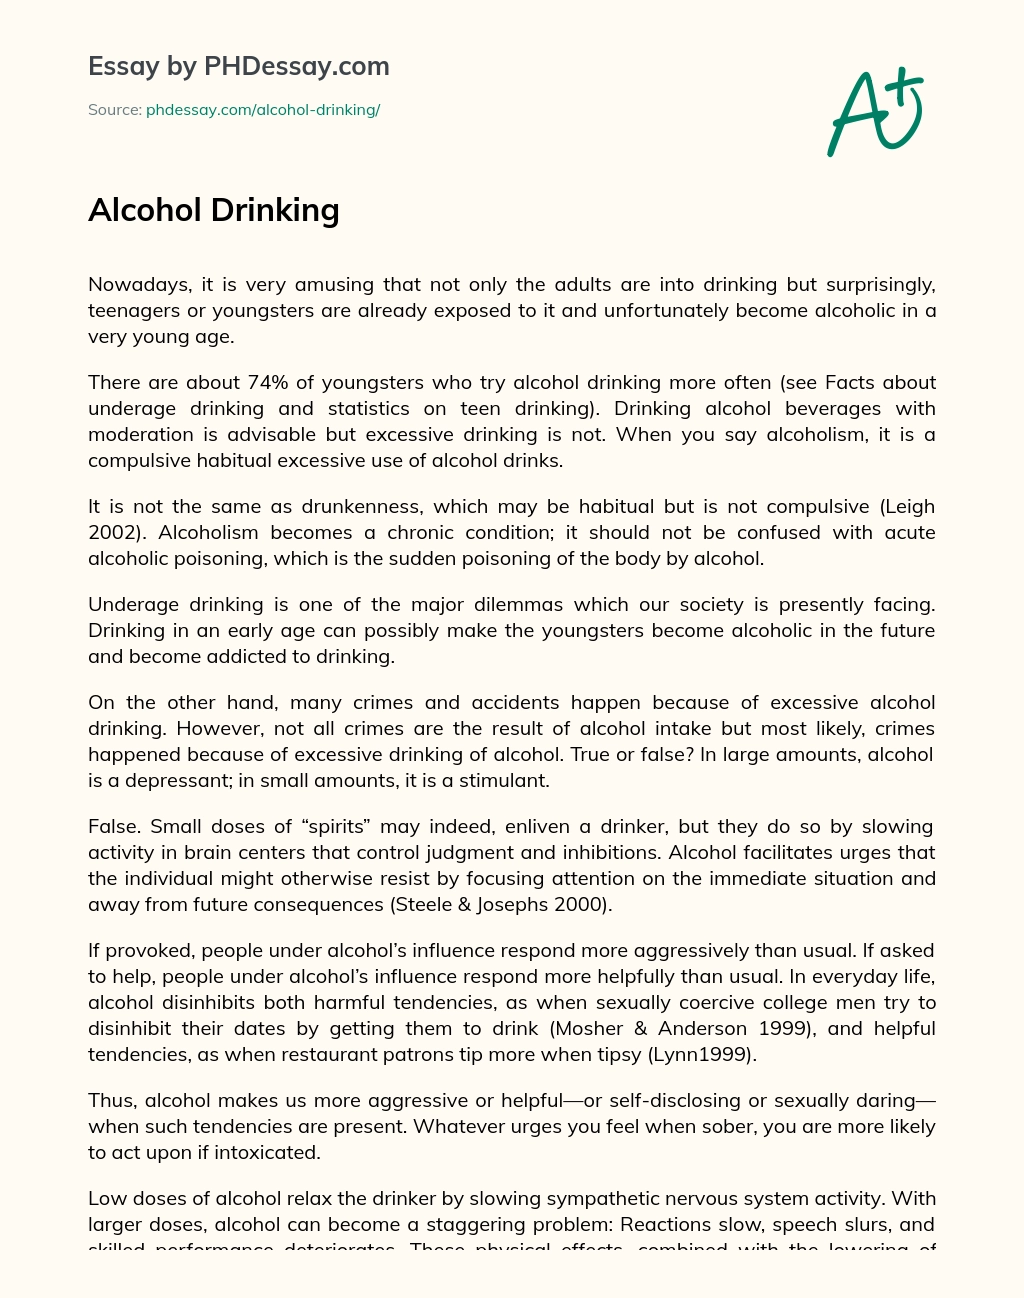 Alcohol Drinking essay